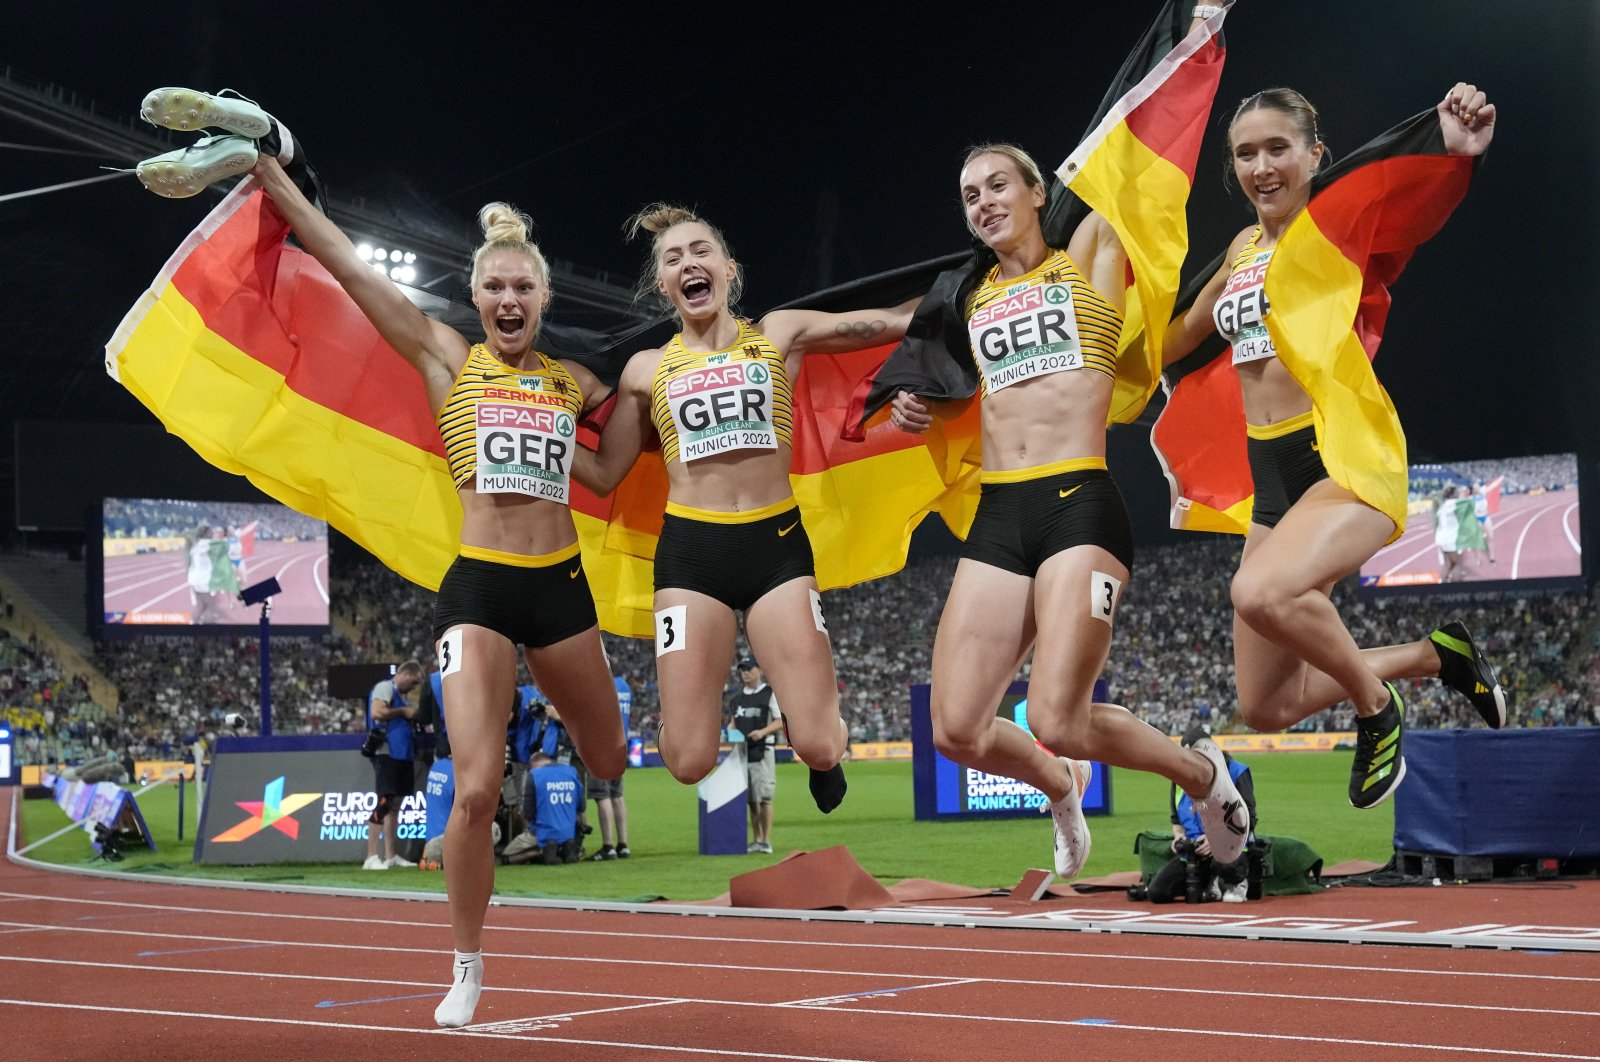 Jerman memuncaki penghitungan atletik Eropa dengan lembing, medali emas estafet